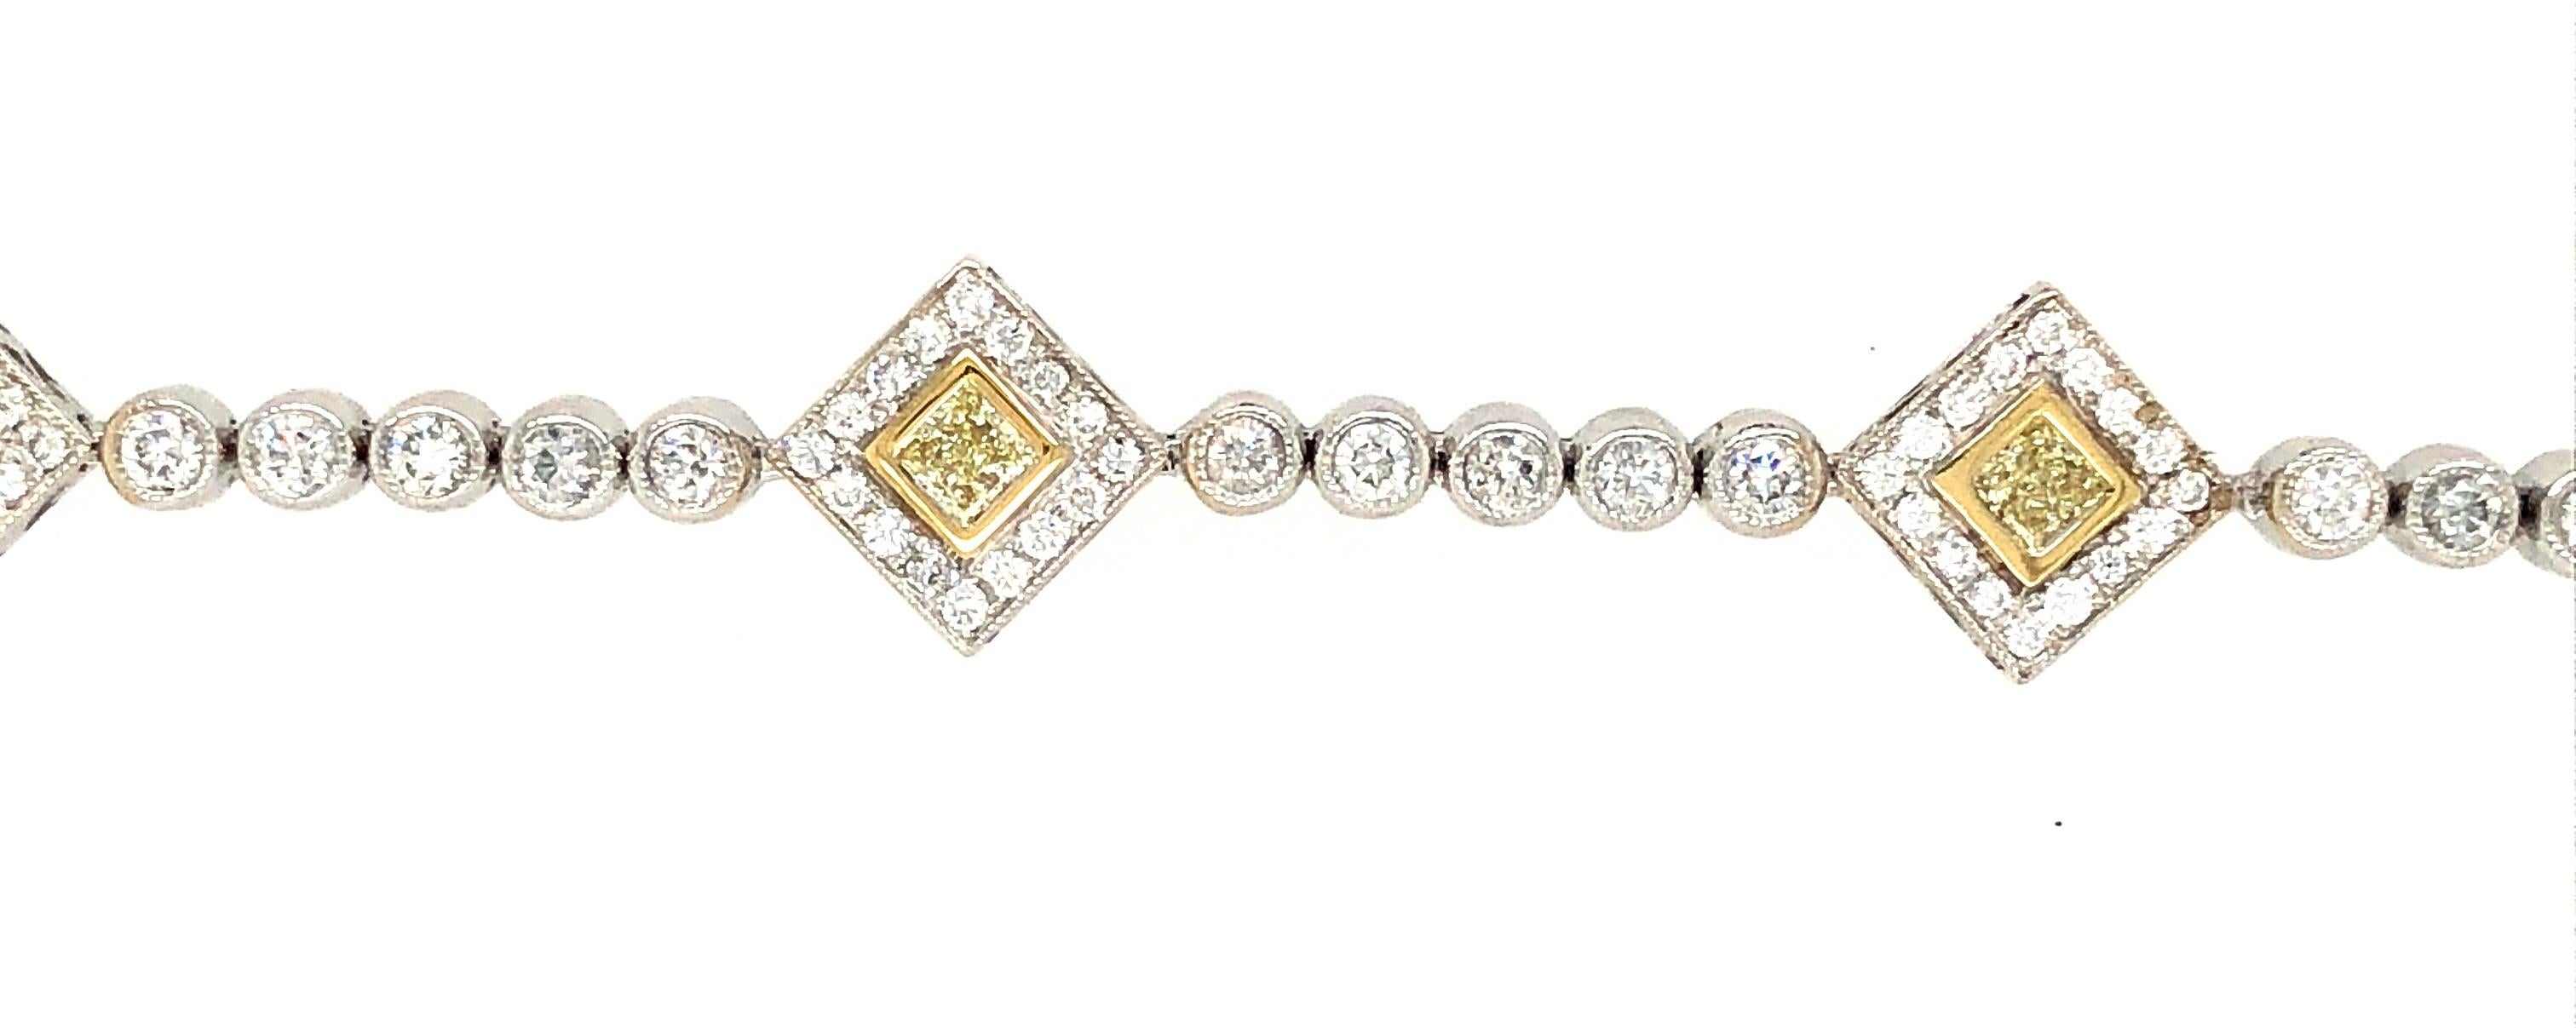 5 Carat Diamond Bracelet 18 Karat Gold 1